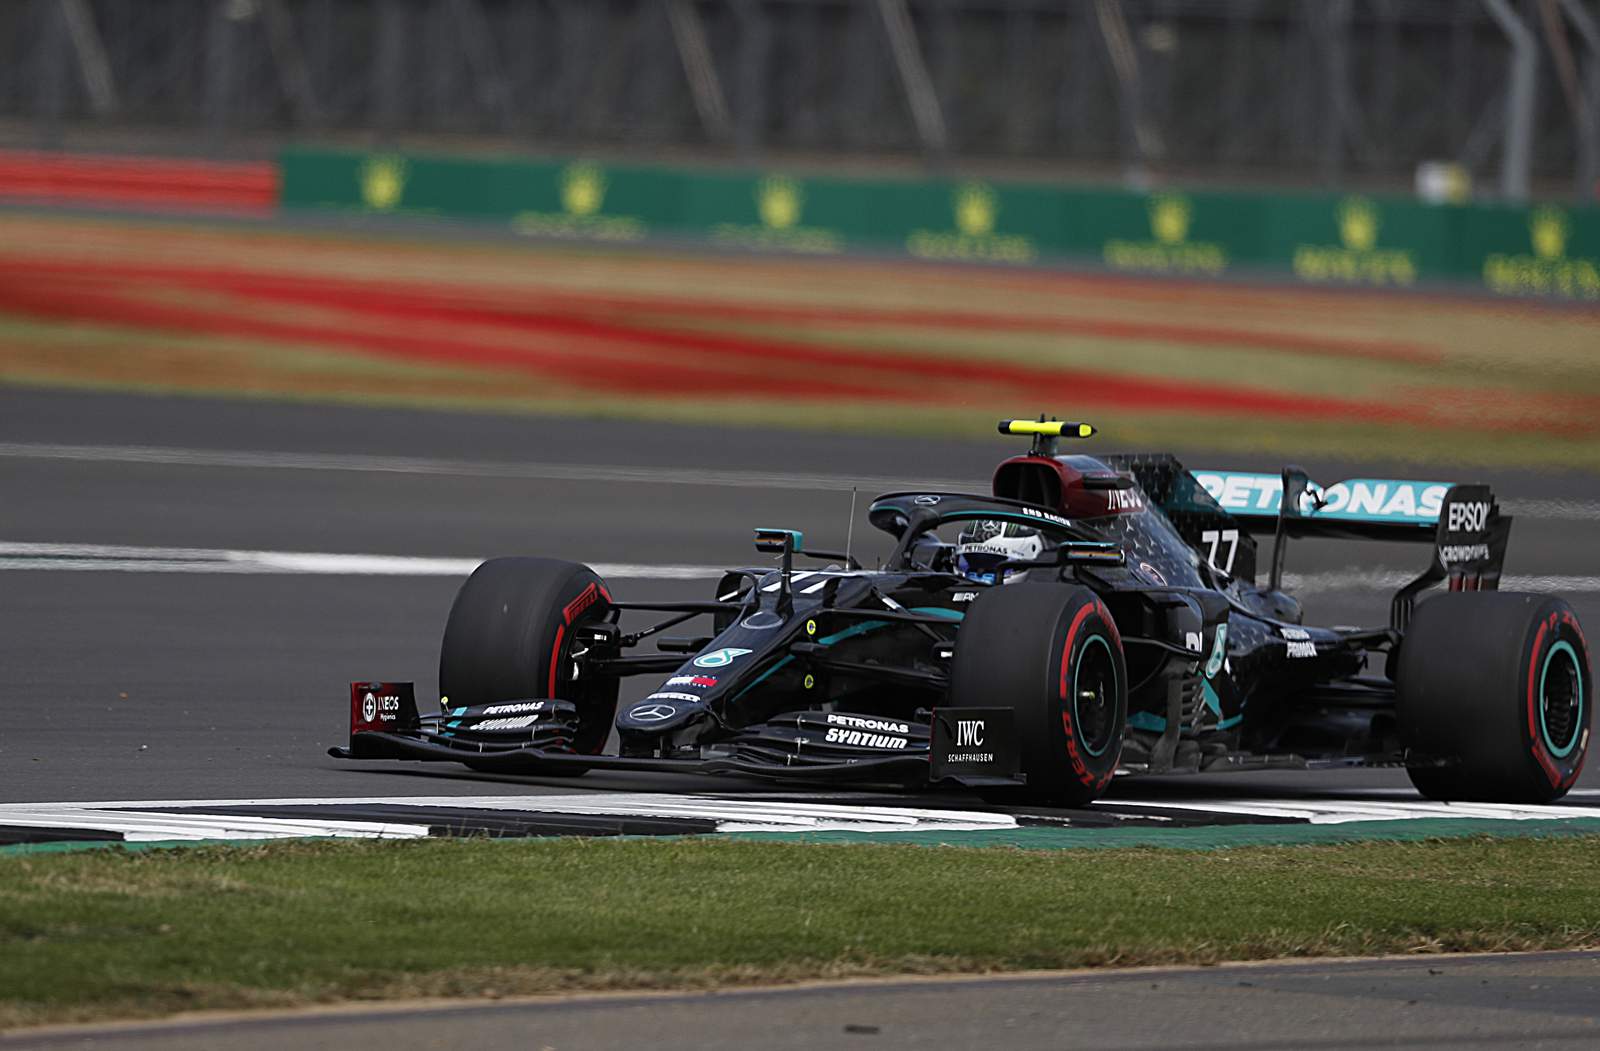 Bottas on pole for Silverstone GP ahead of teammate Hamilton